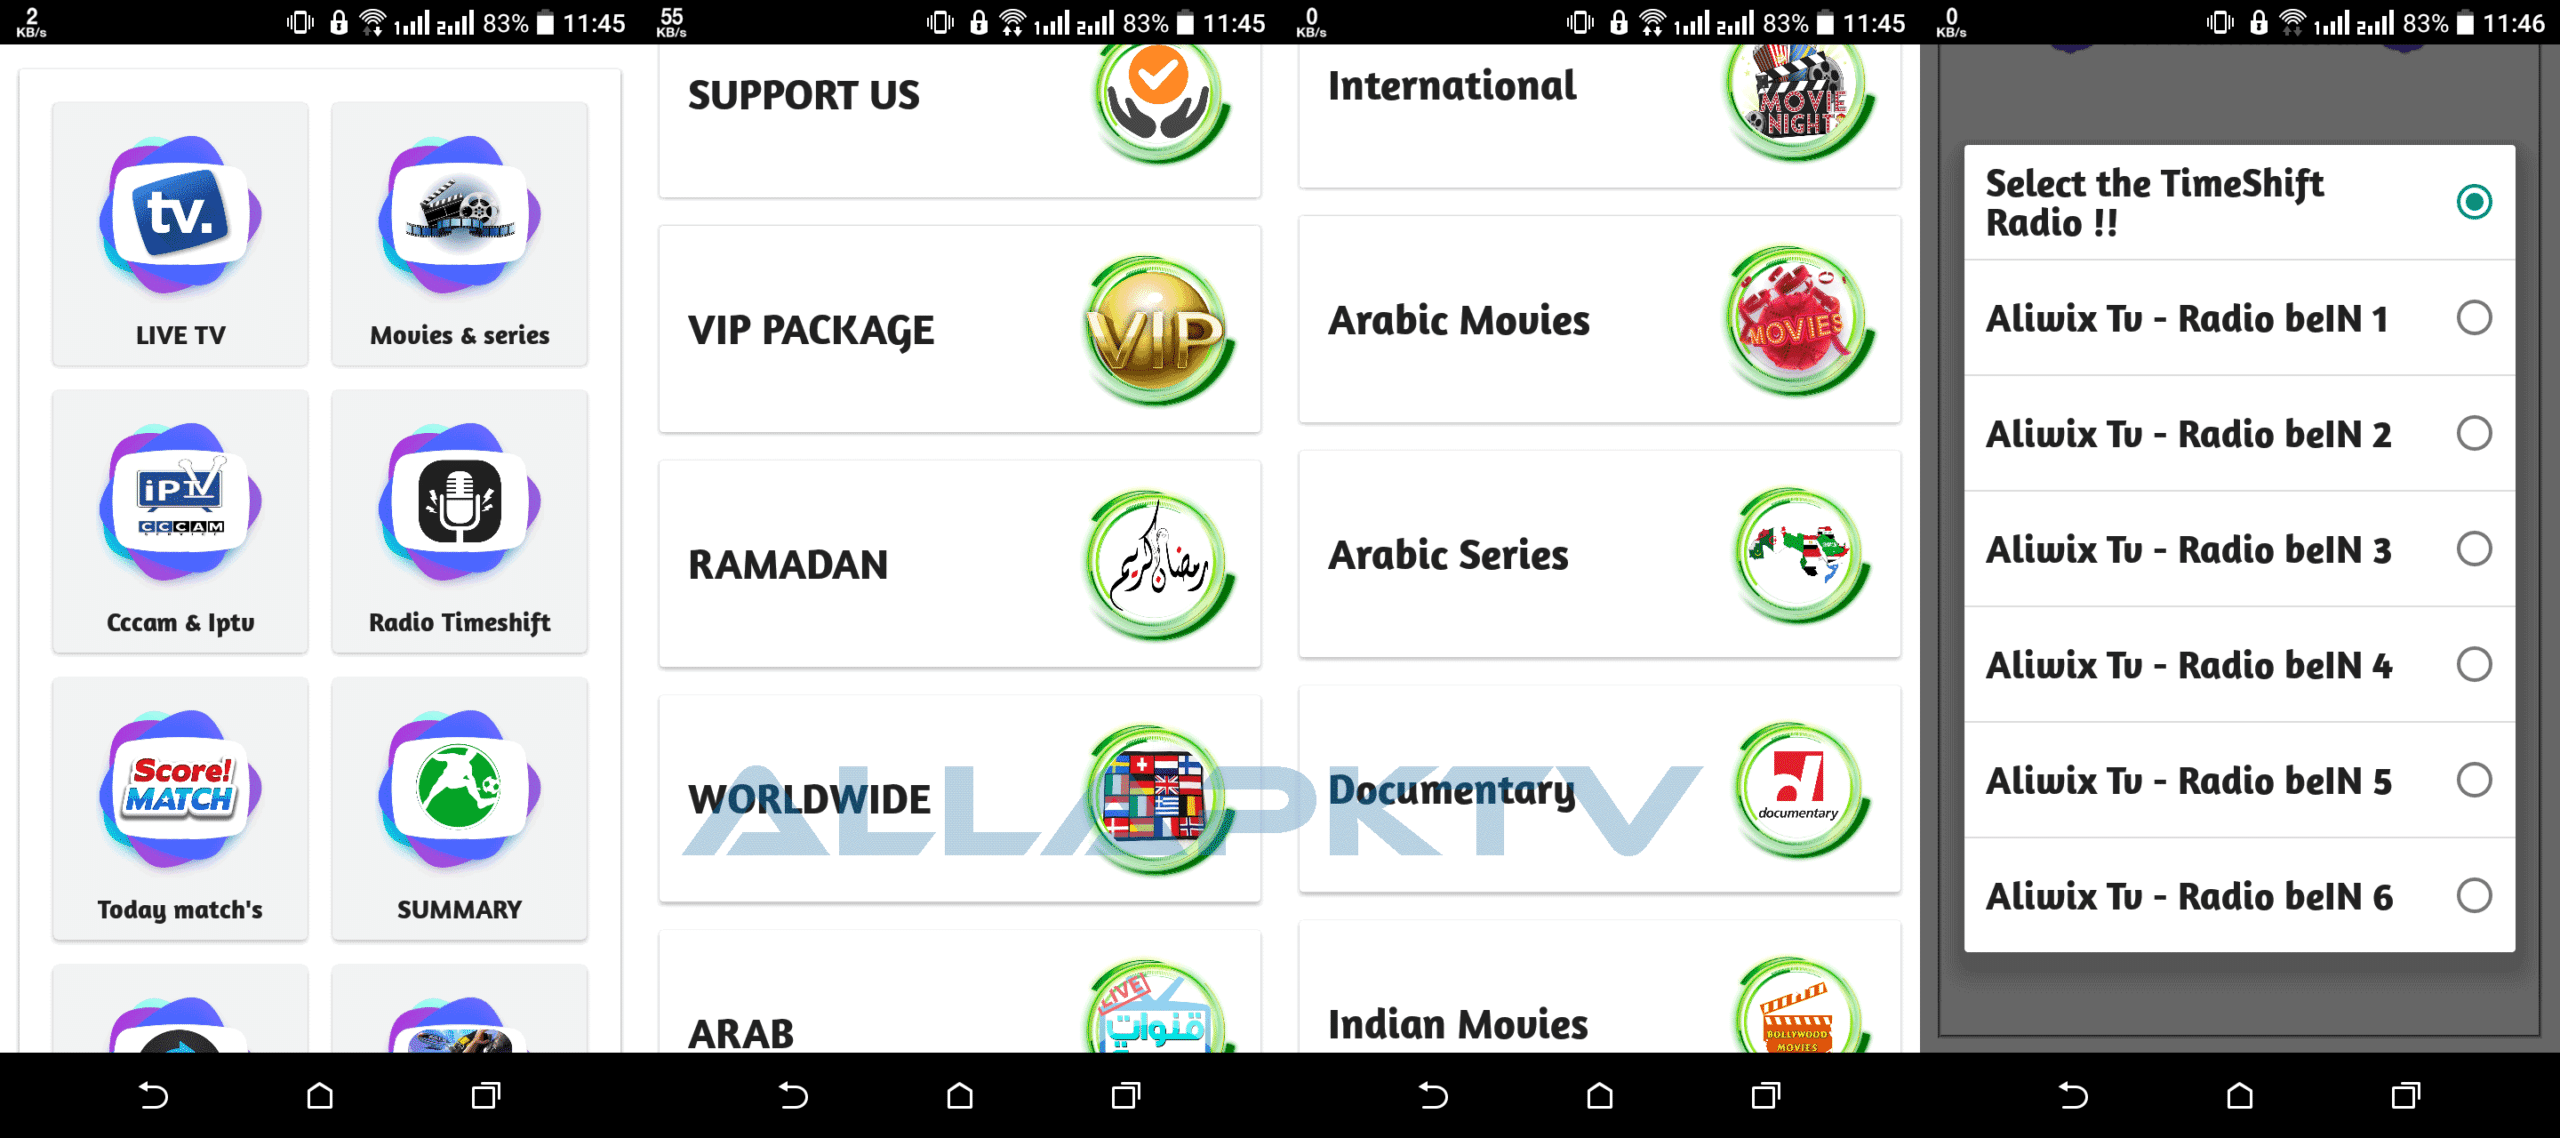 Aliwix TV Lite Apk [Latest] Android 2